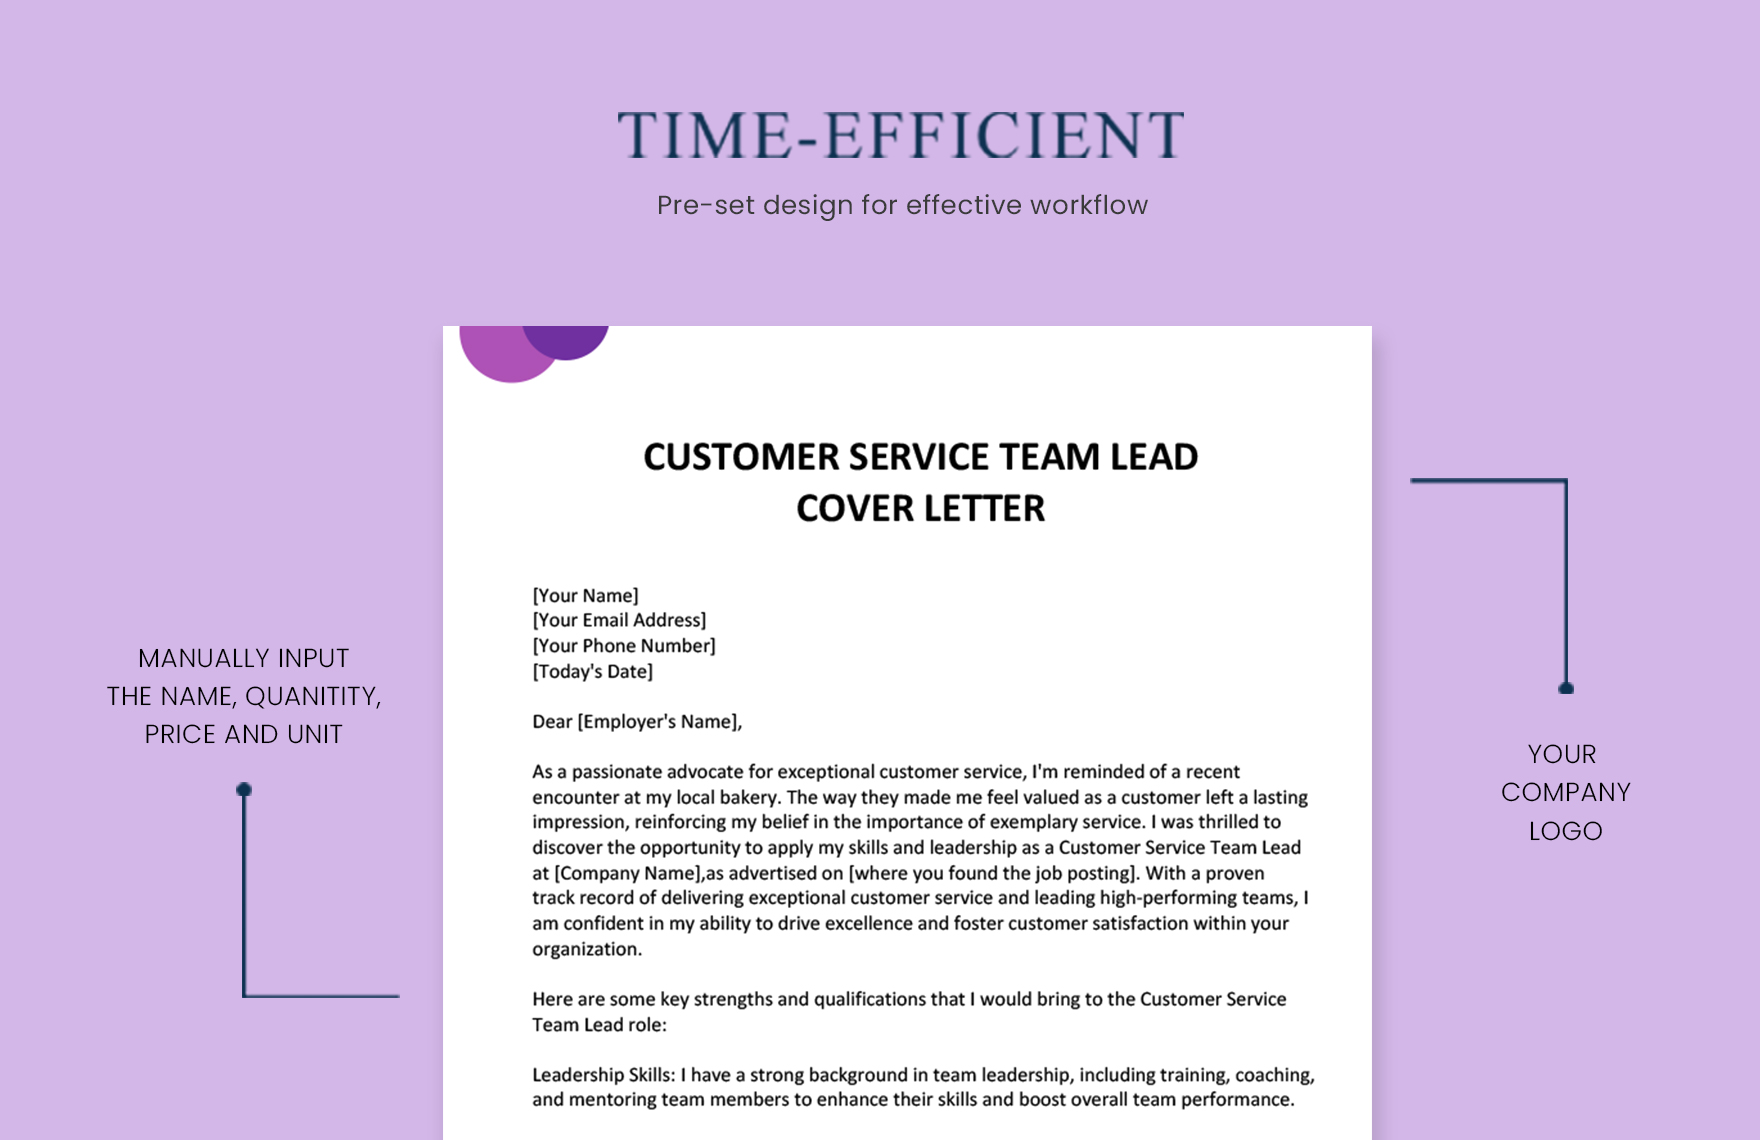 Customer Service Team Lead Cover Letter